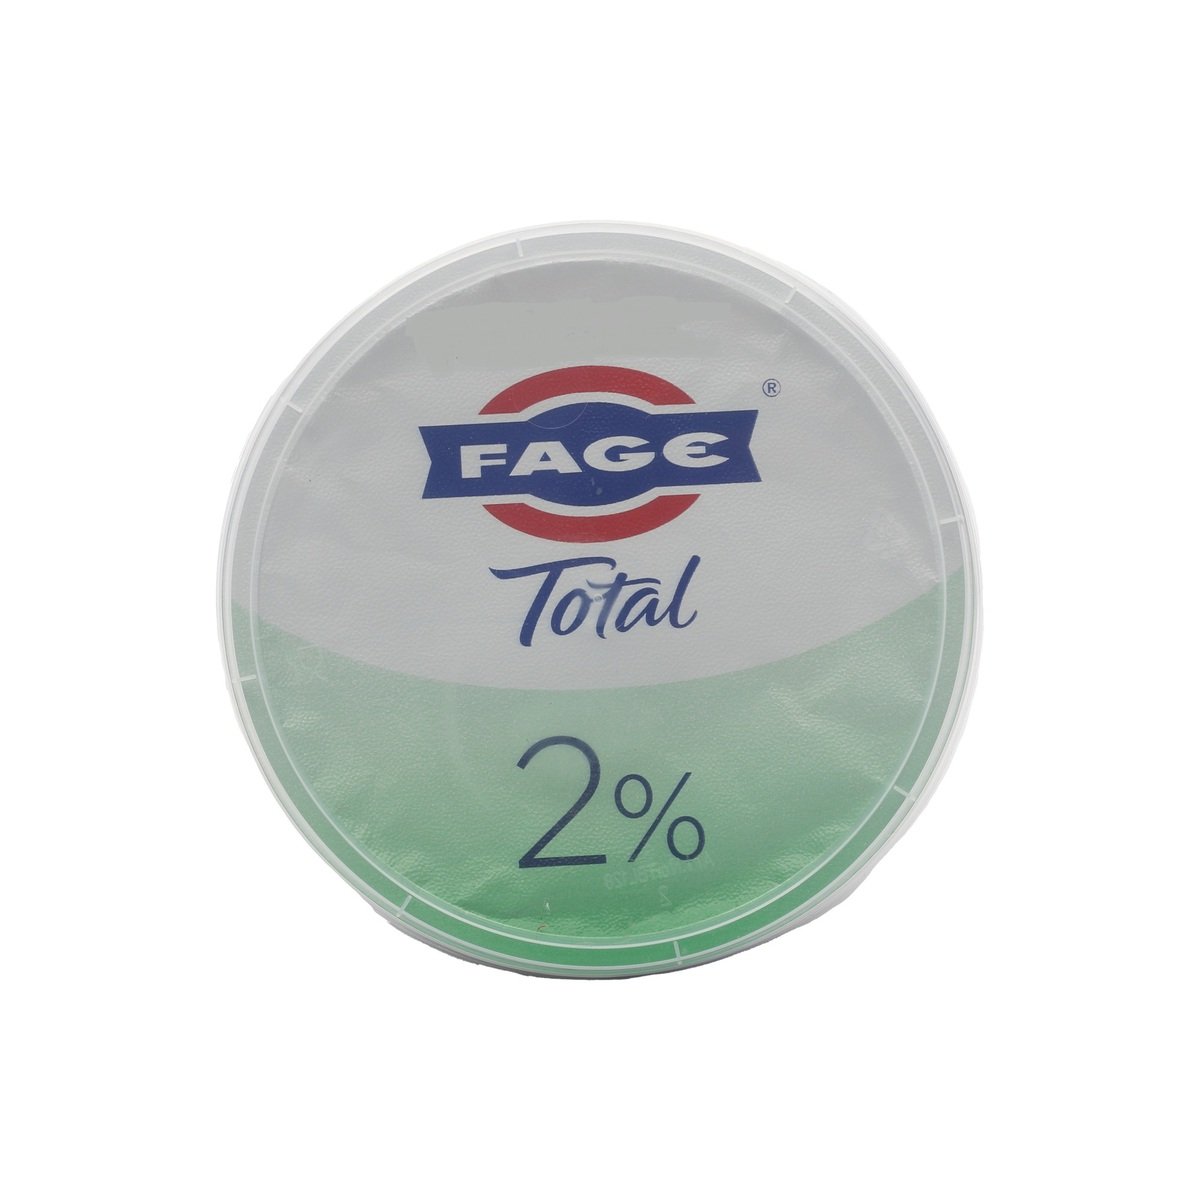 Fage Total 2% Yoghurt 450 g